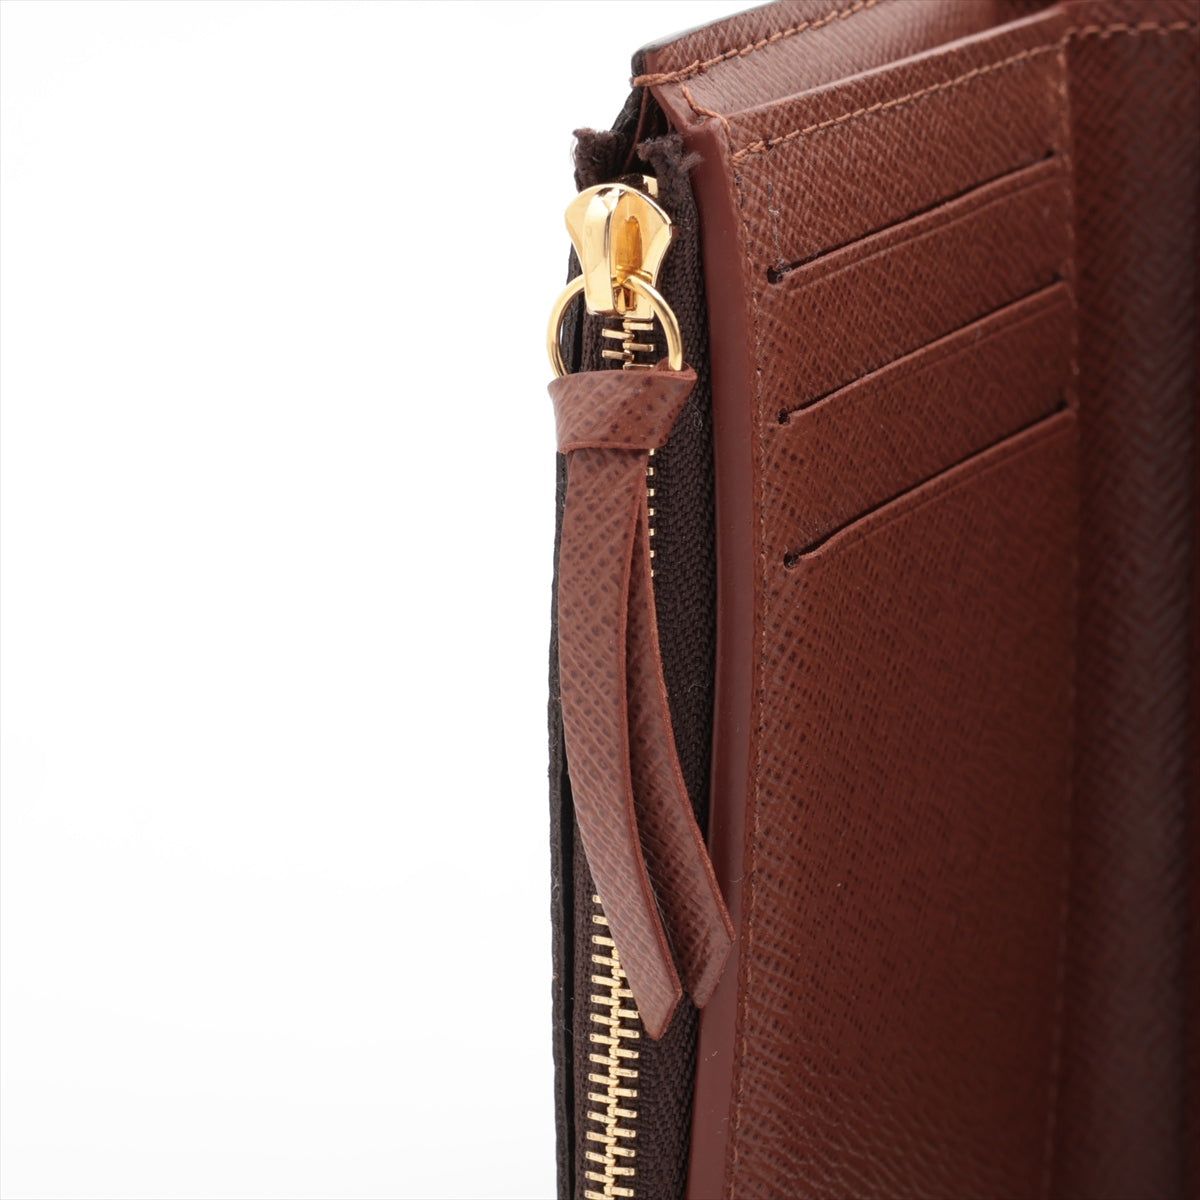 Louis Vuitton Monogram Portefolio Victoria M62472 Brown Compact Wallet